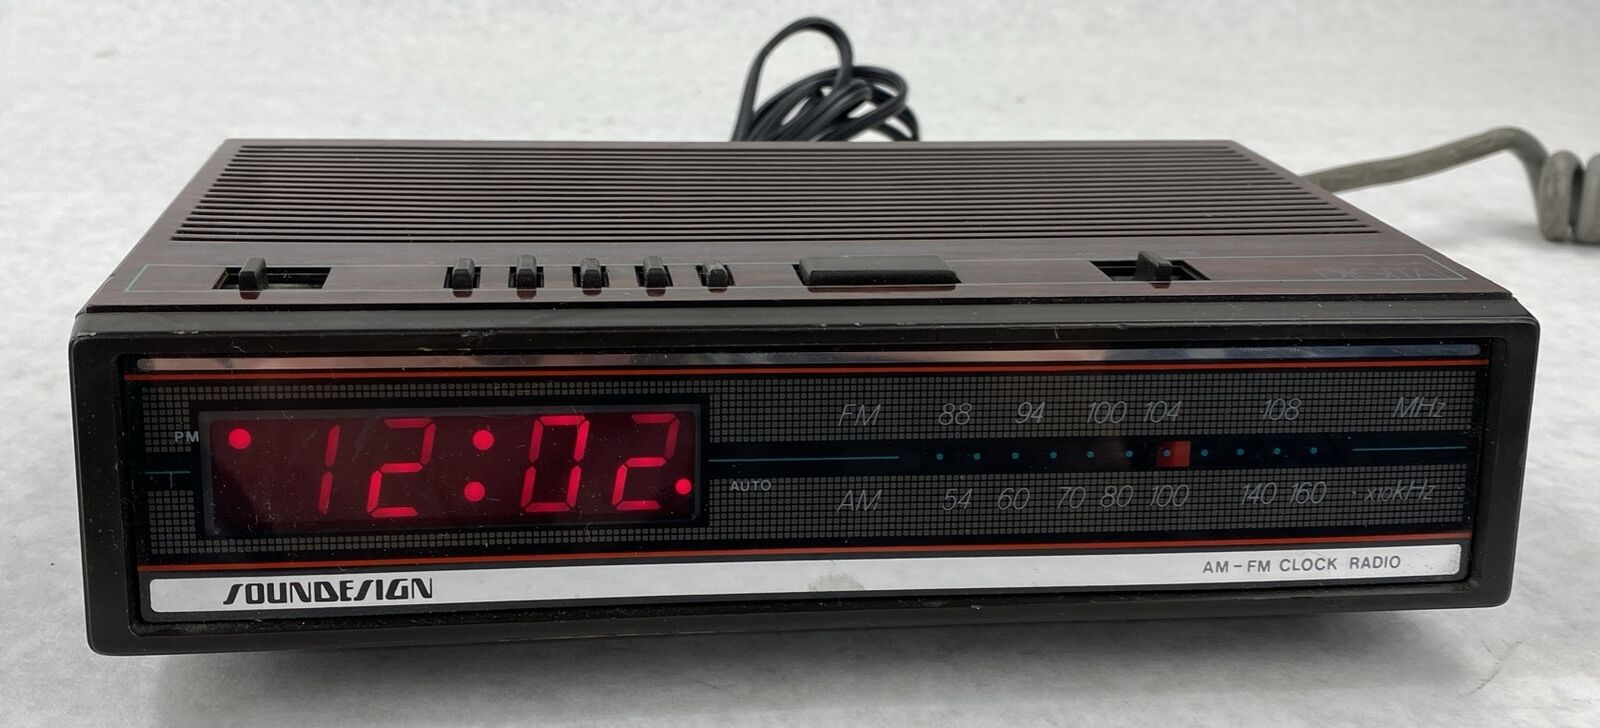 Soundesign 3620WAL Vintage Retro AM/FM Radio Alarm Clock Neon Red Display